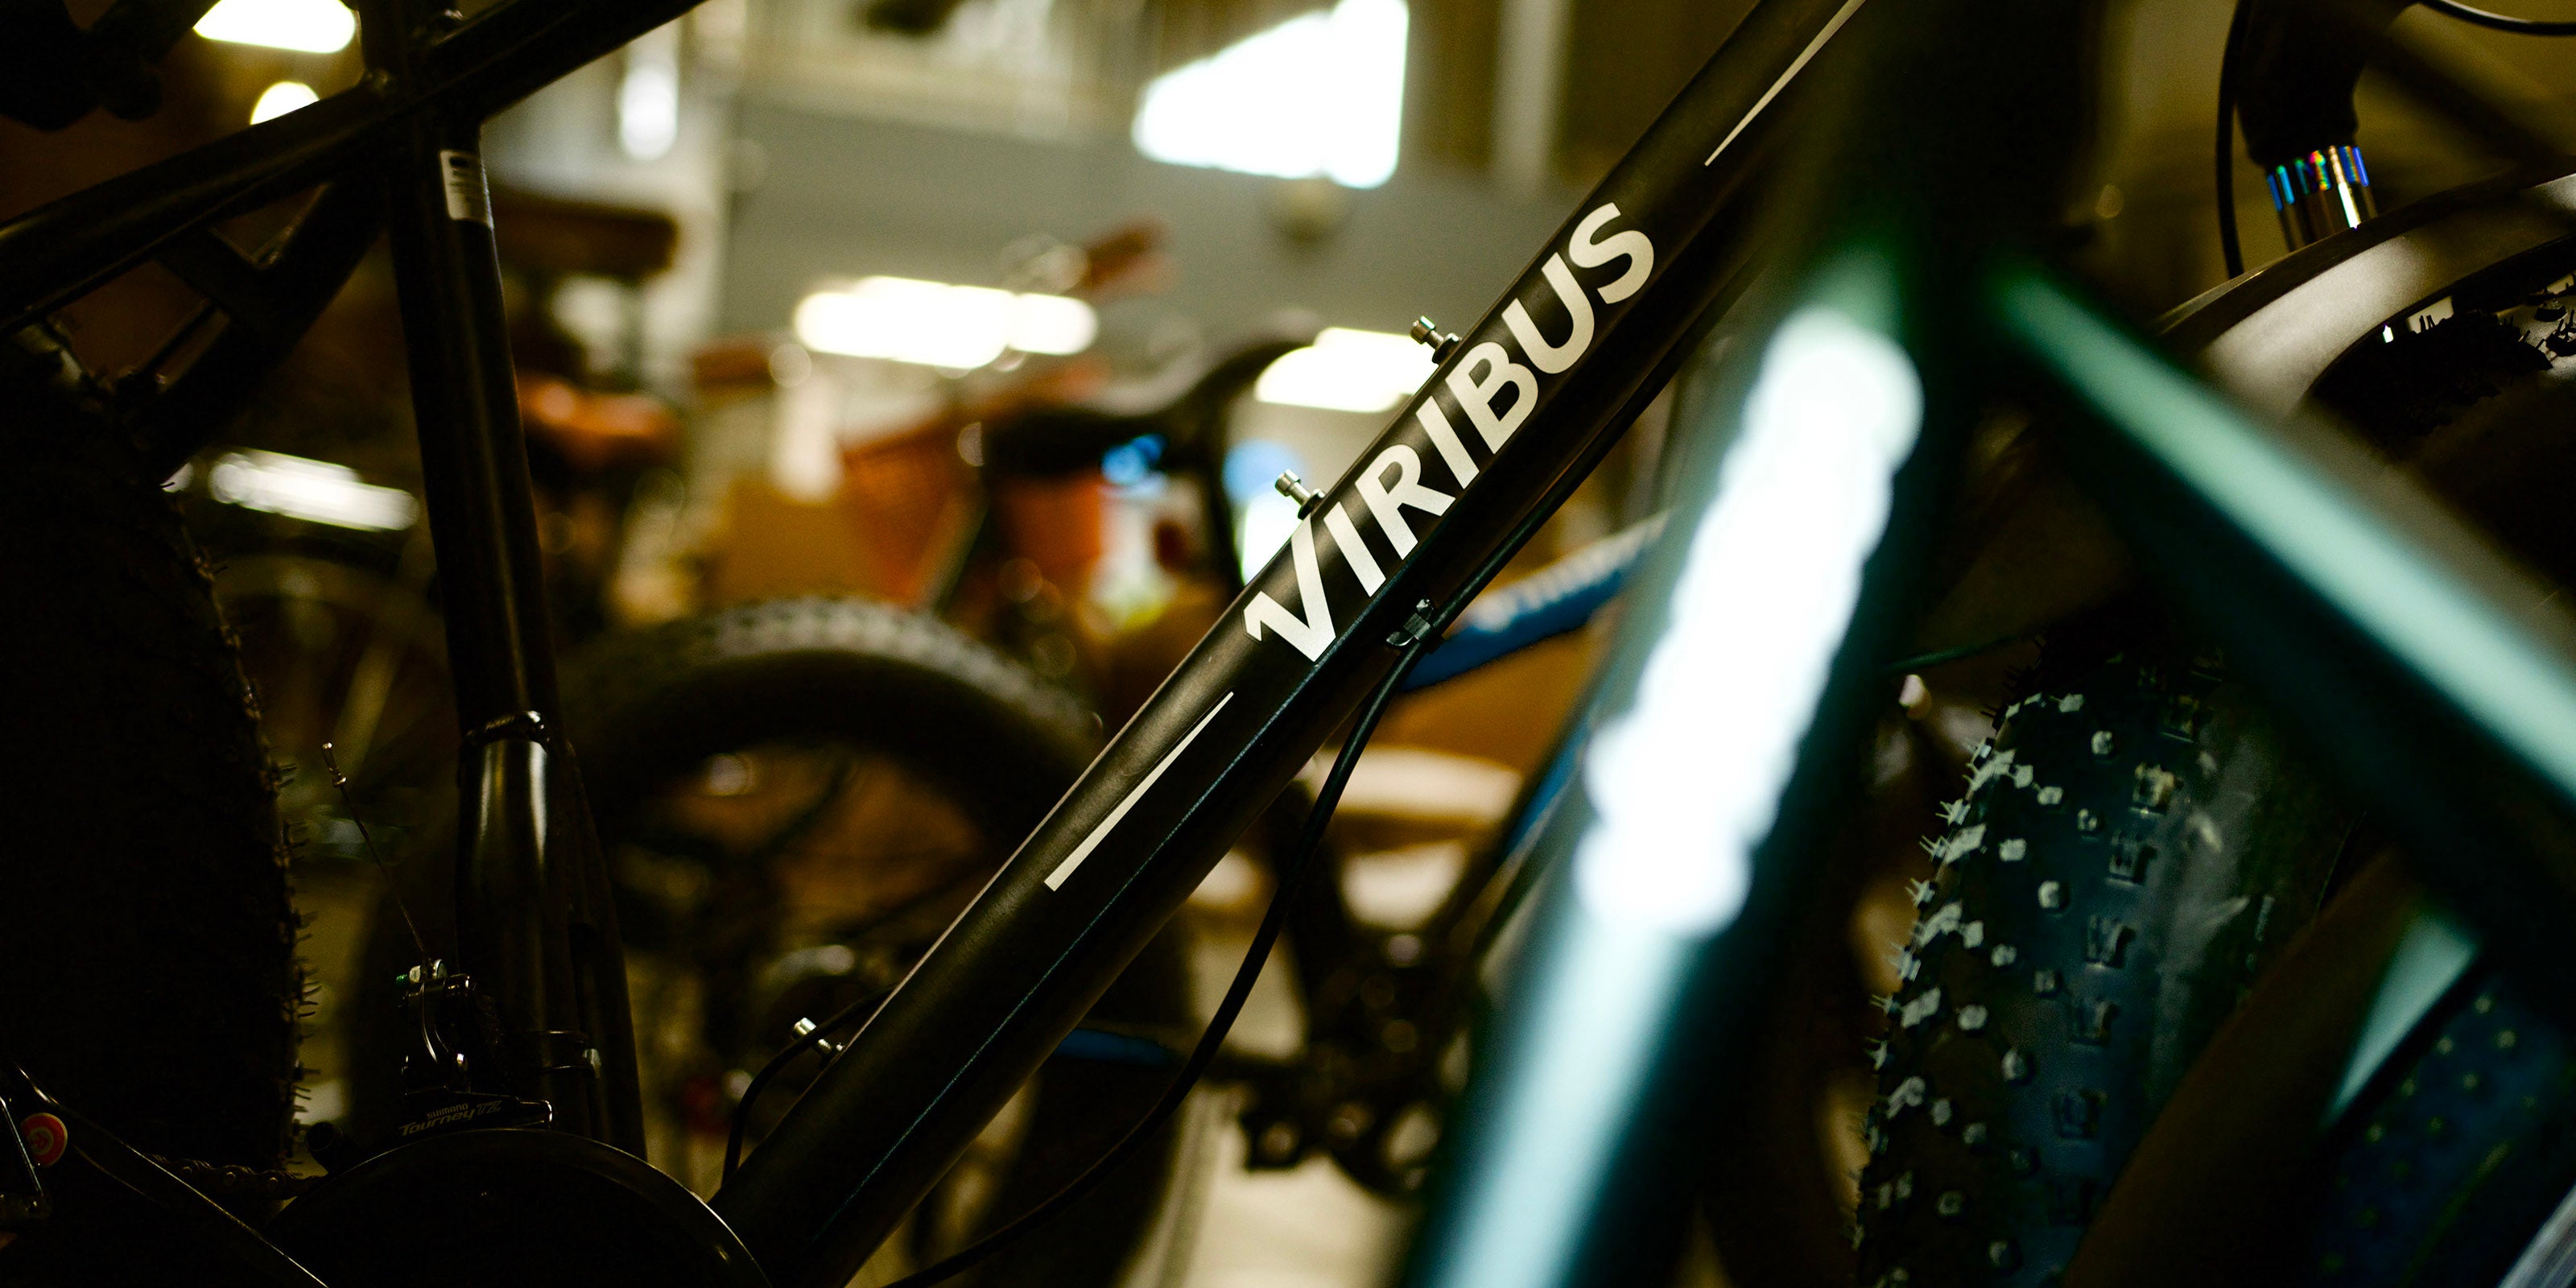 About Viribus bicycle - Viribus technology